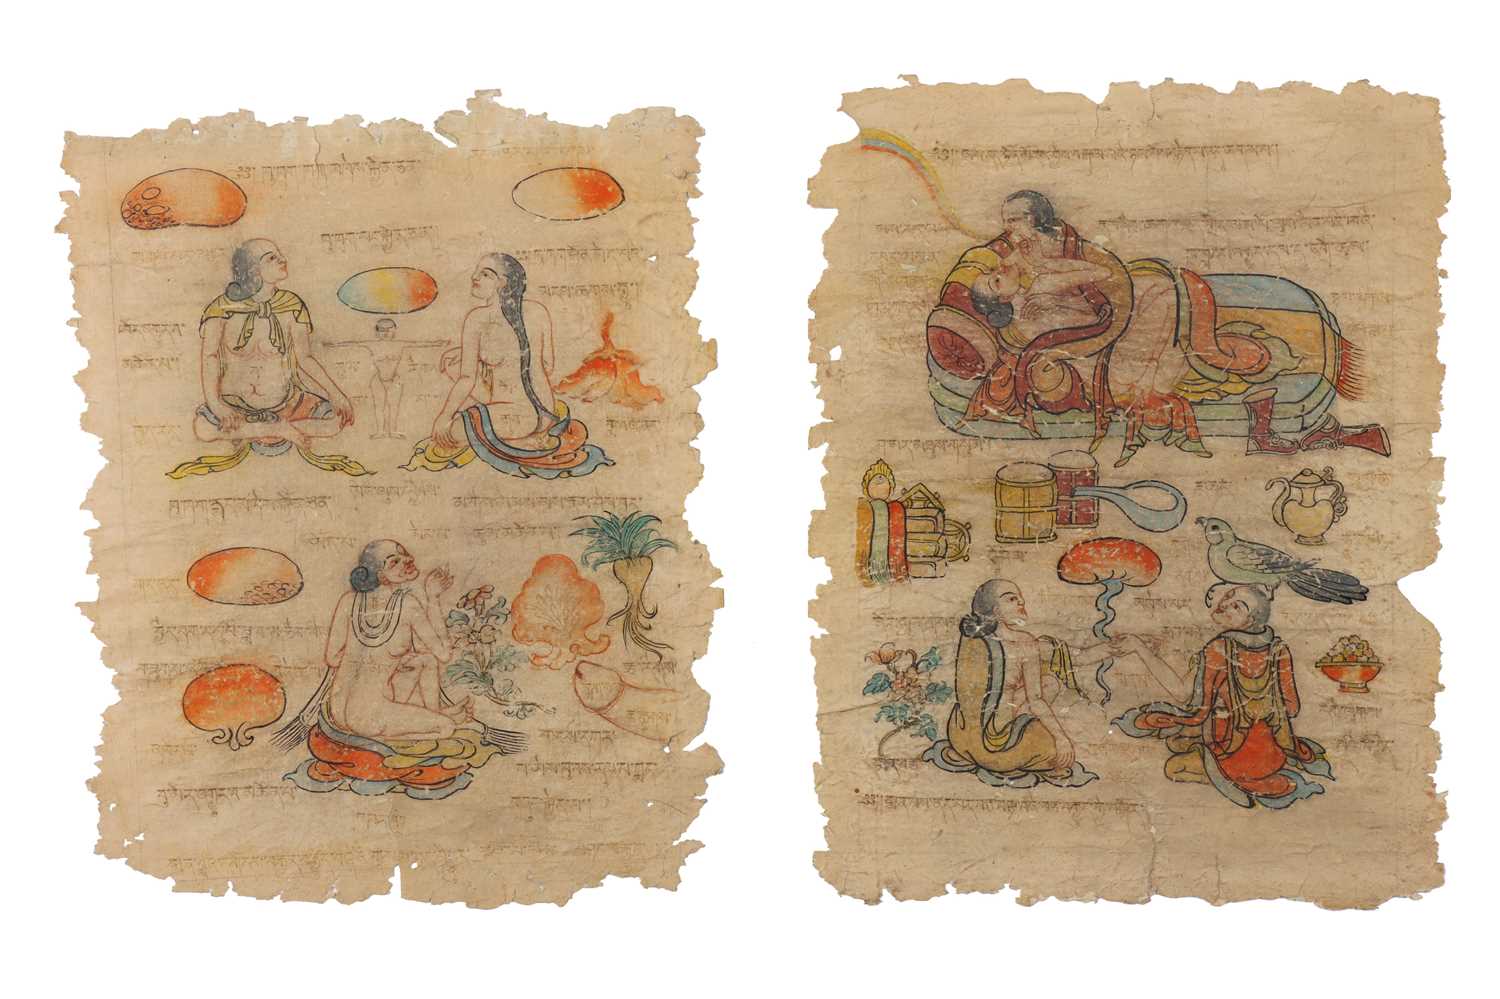 Lot 113 - Medicine - A Collection of Tibetan Medical Texts